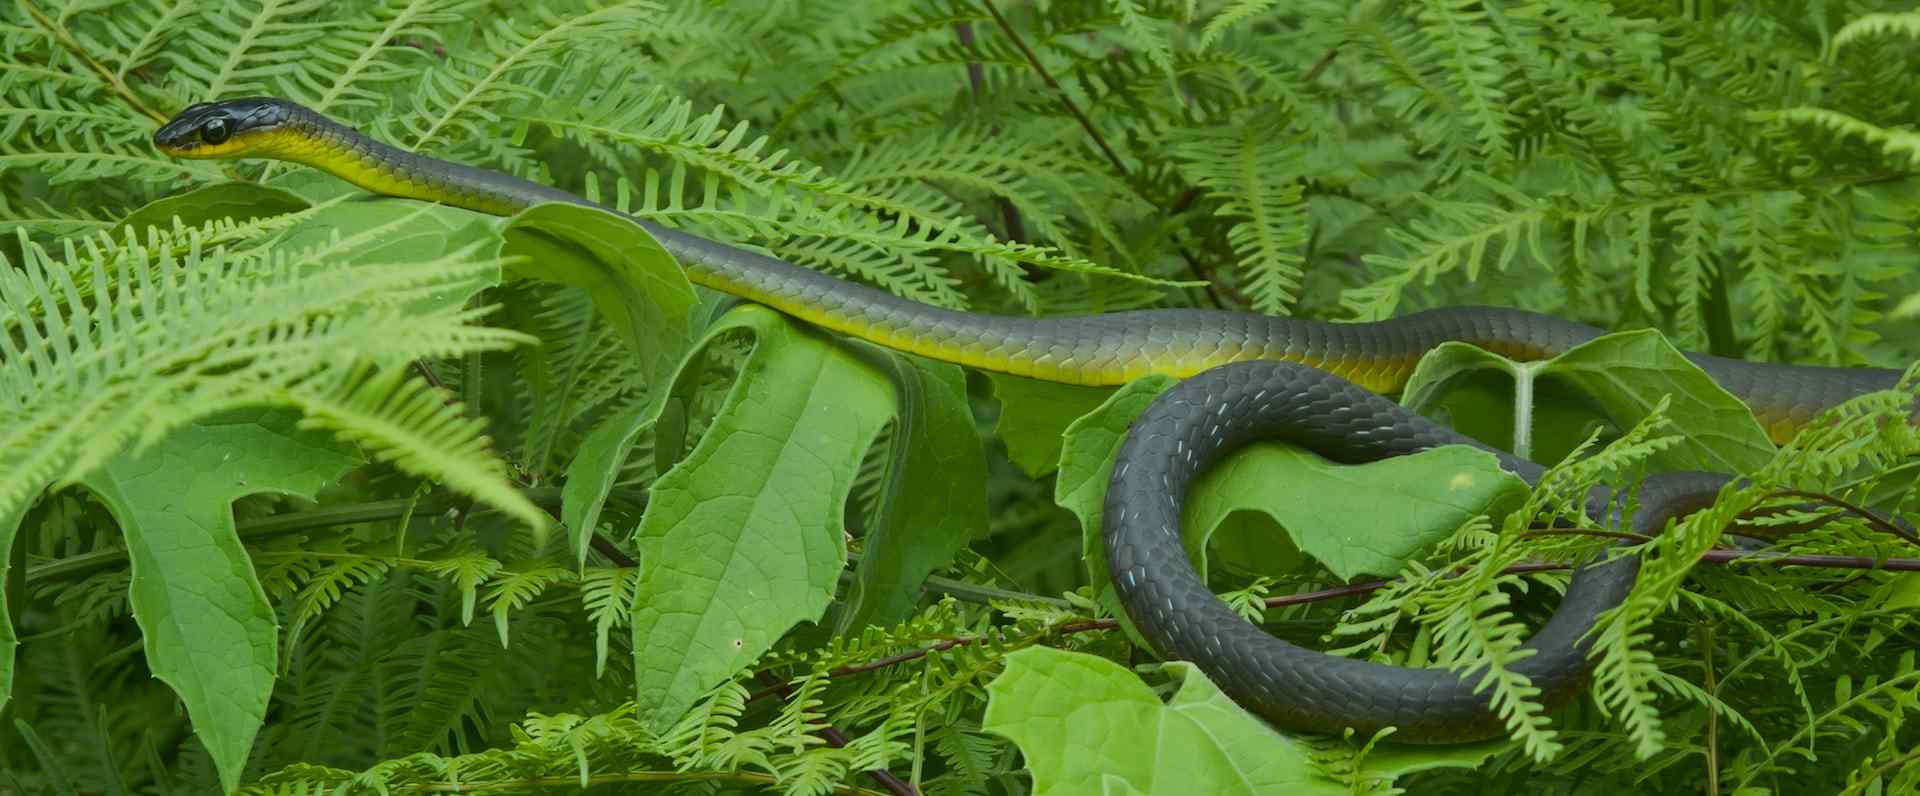 Wompoo Green Tree Snake 9Mar11-7559-min